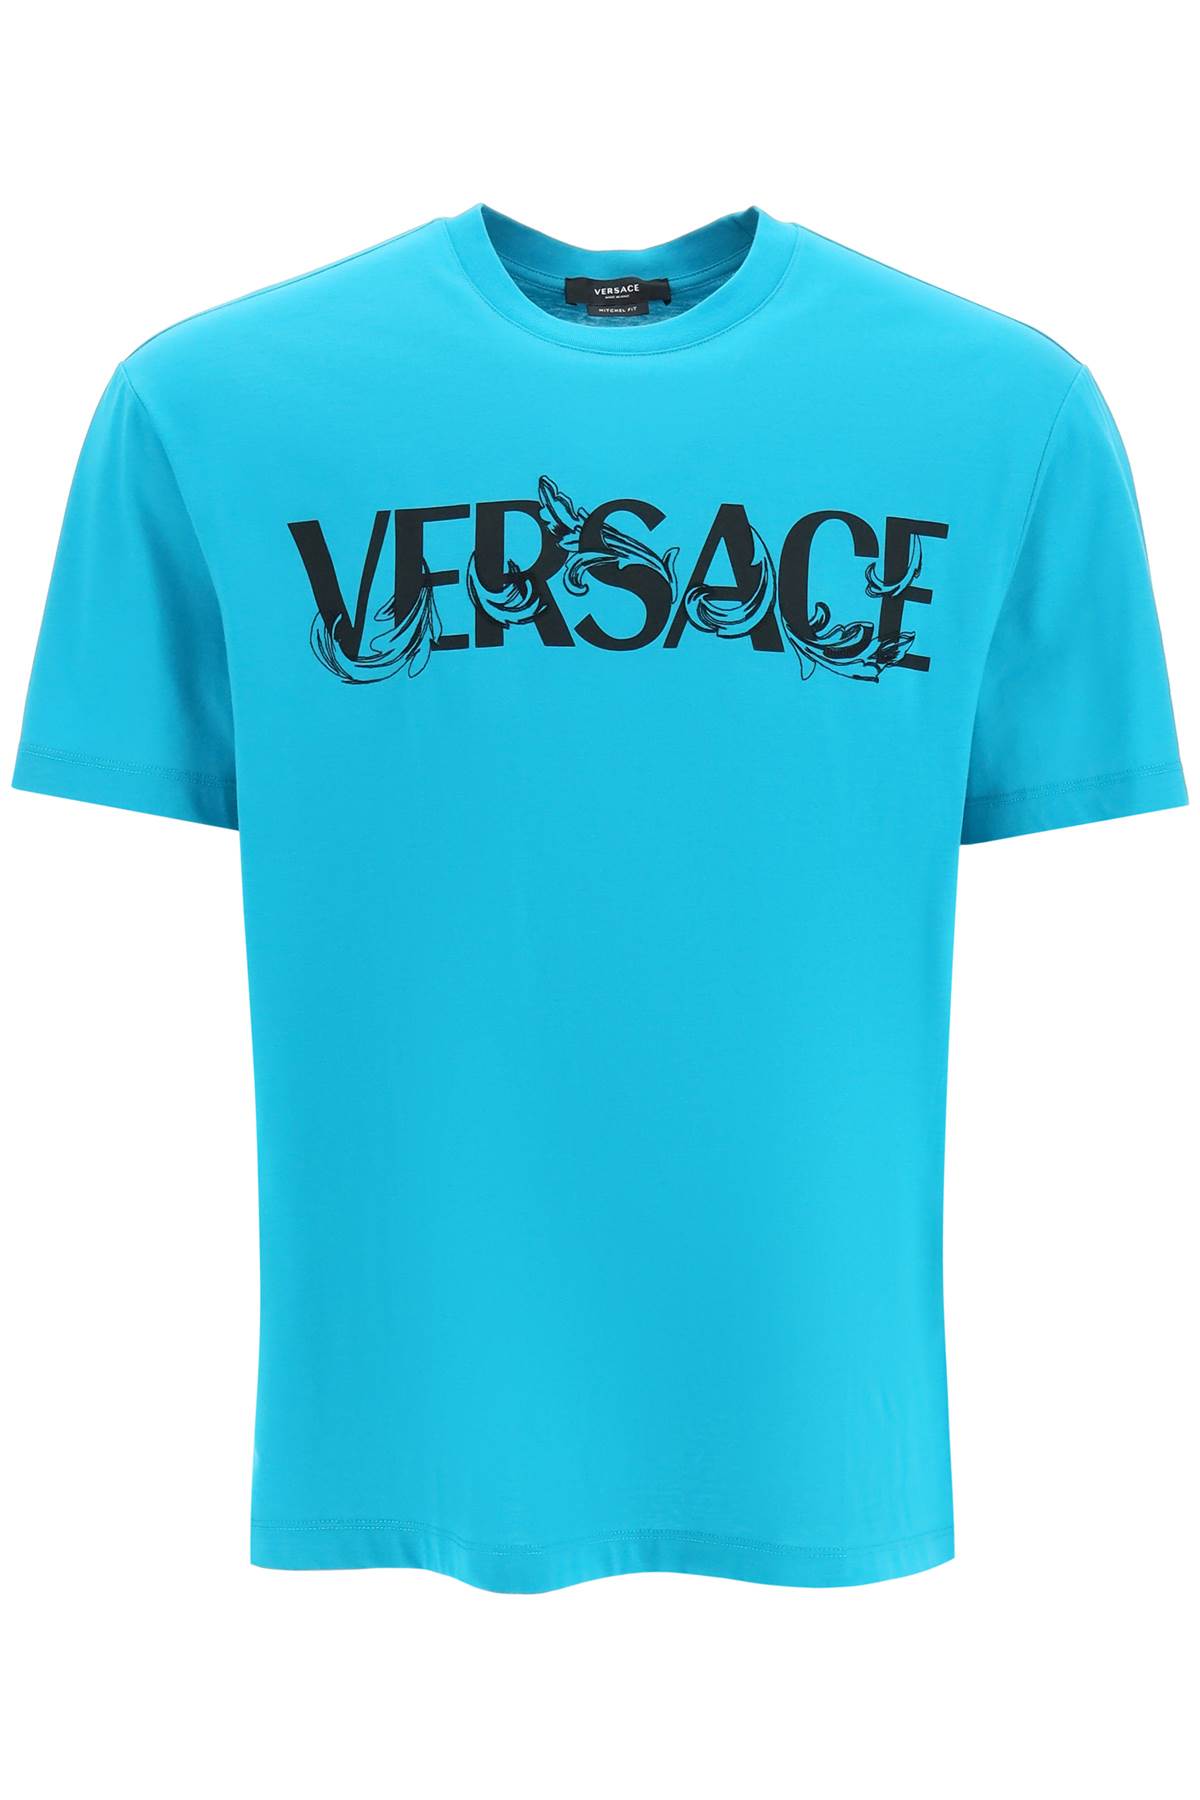 Versace Mitchel Fit Logo T-shirt